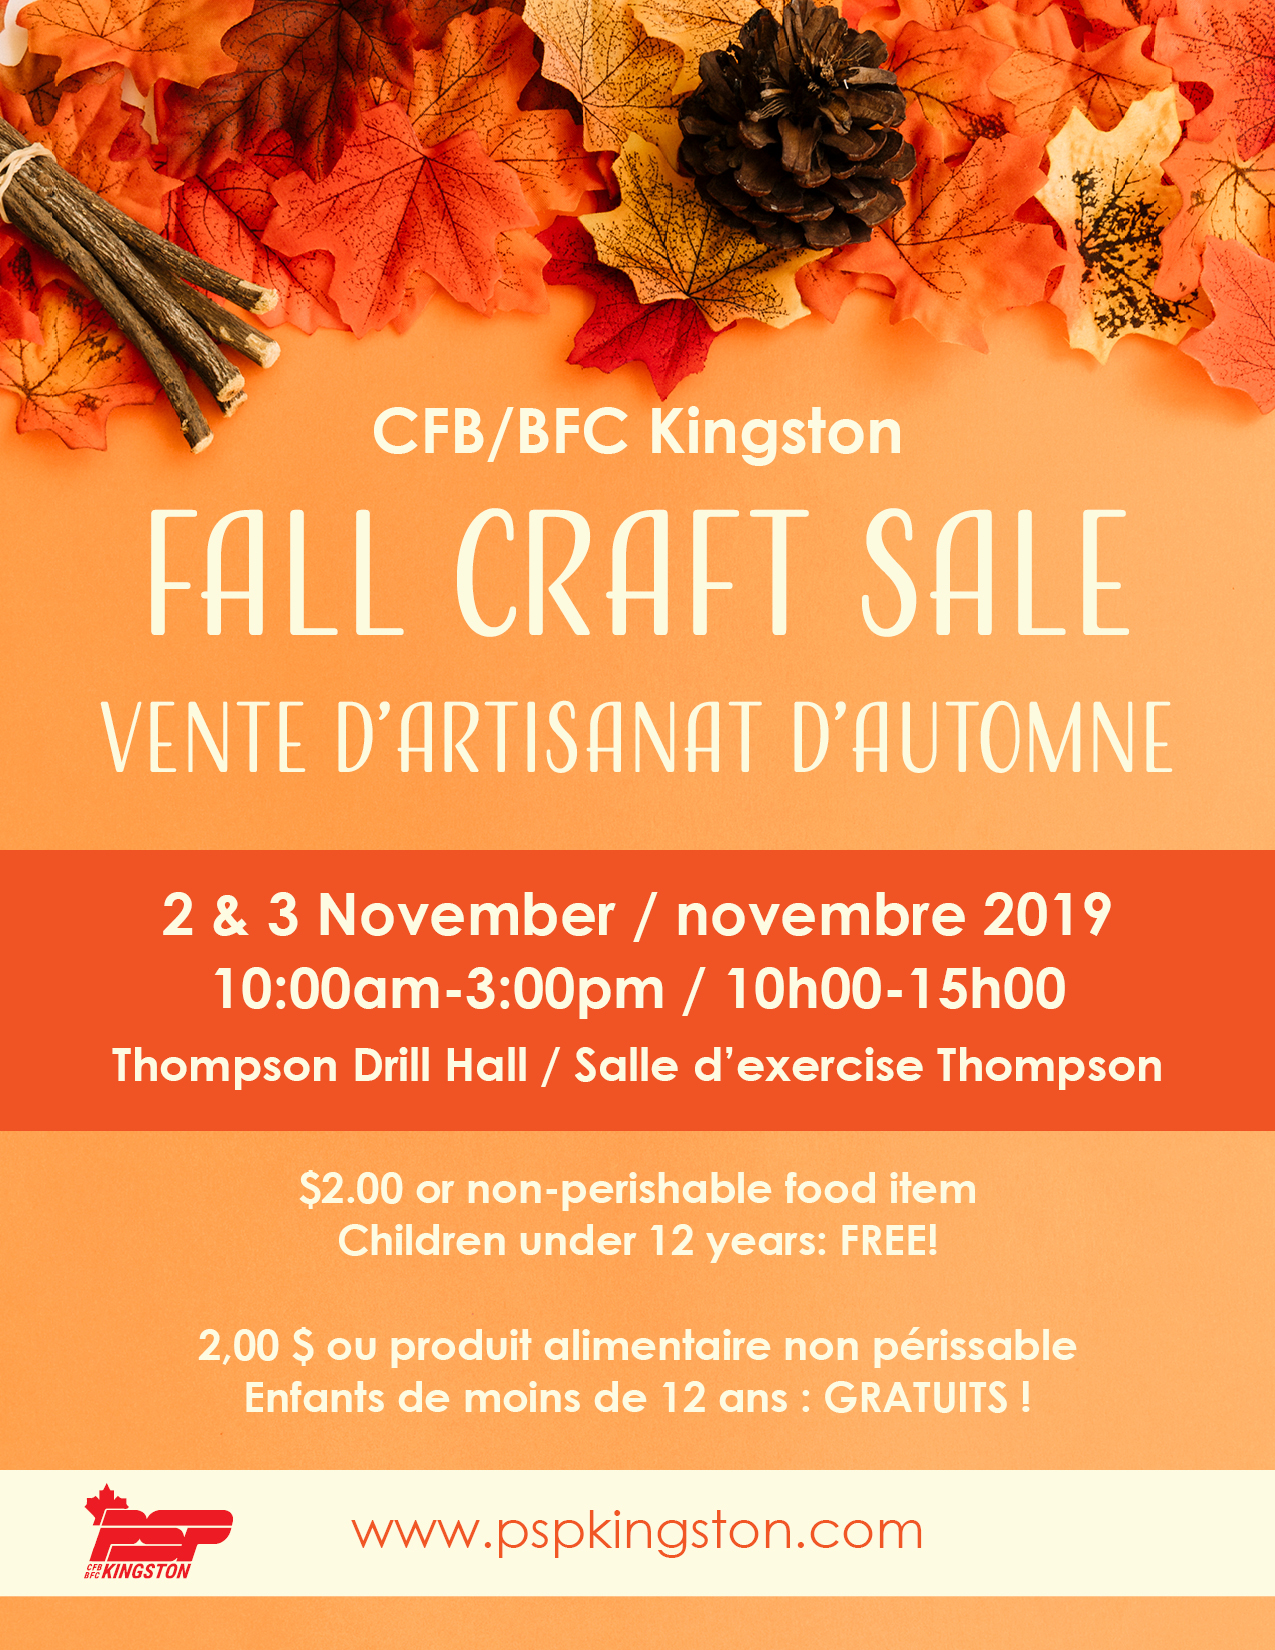 CFB Kingston Fall Craft Sale